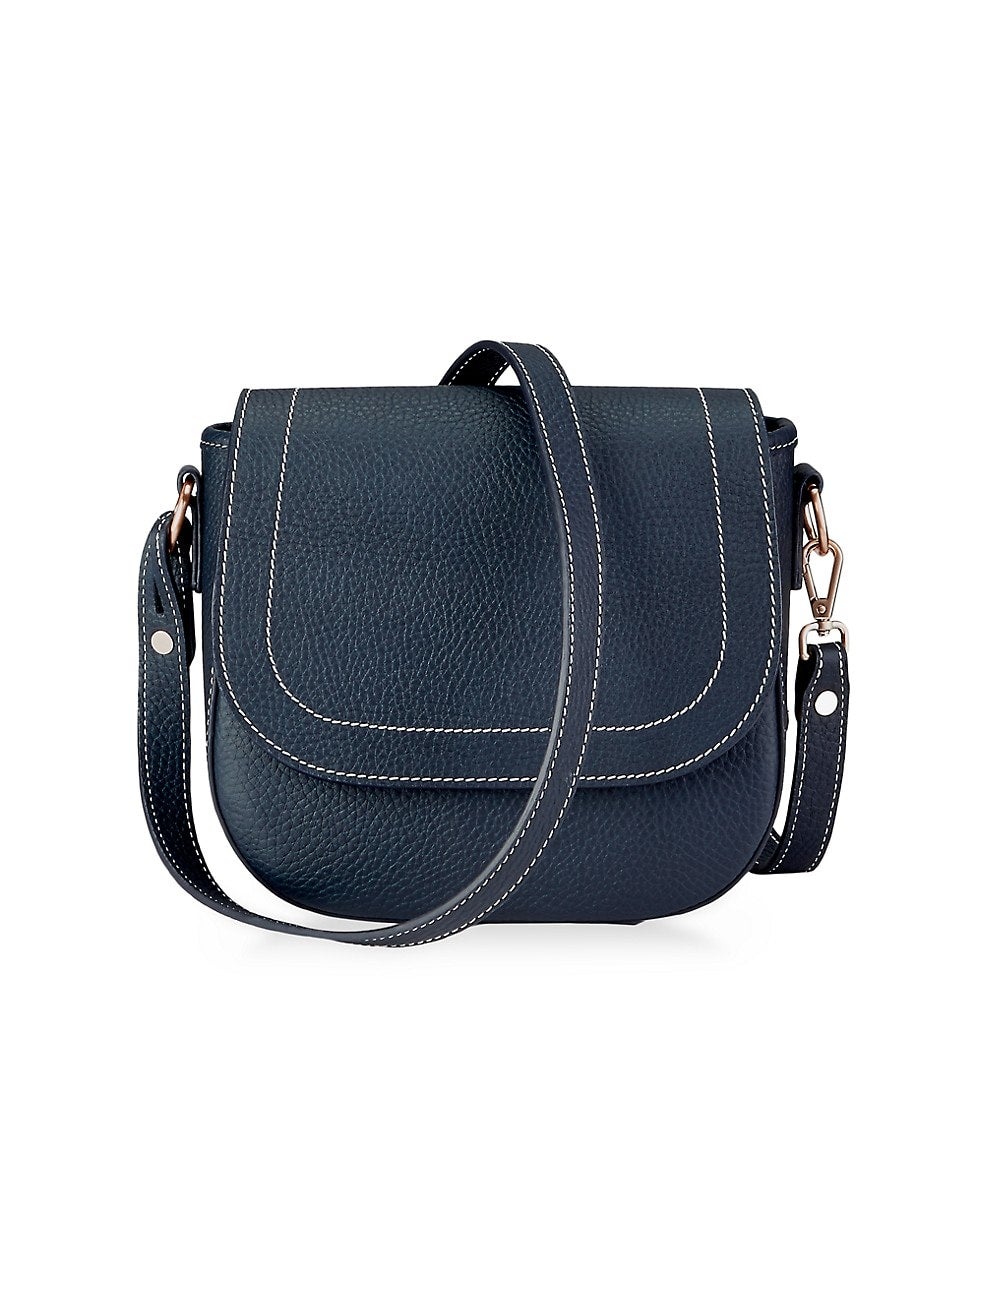 Gigi New York + Jackson Leather Saddle Bag